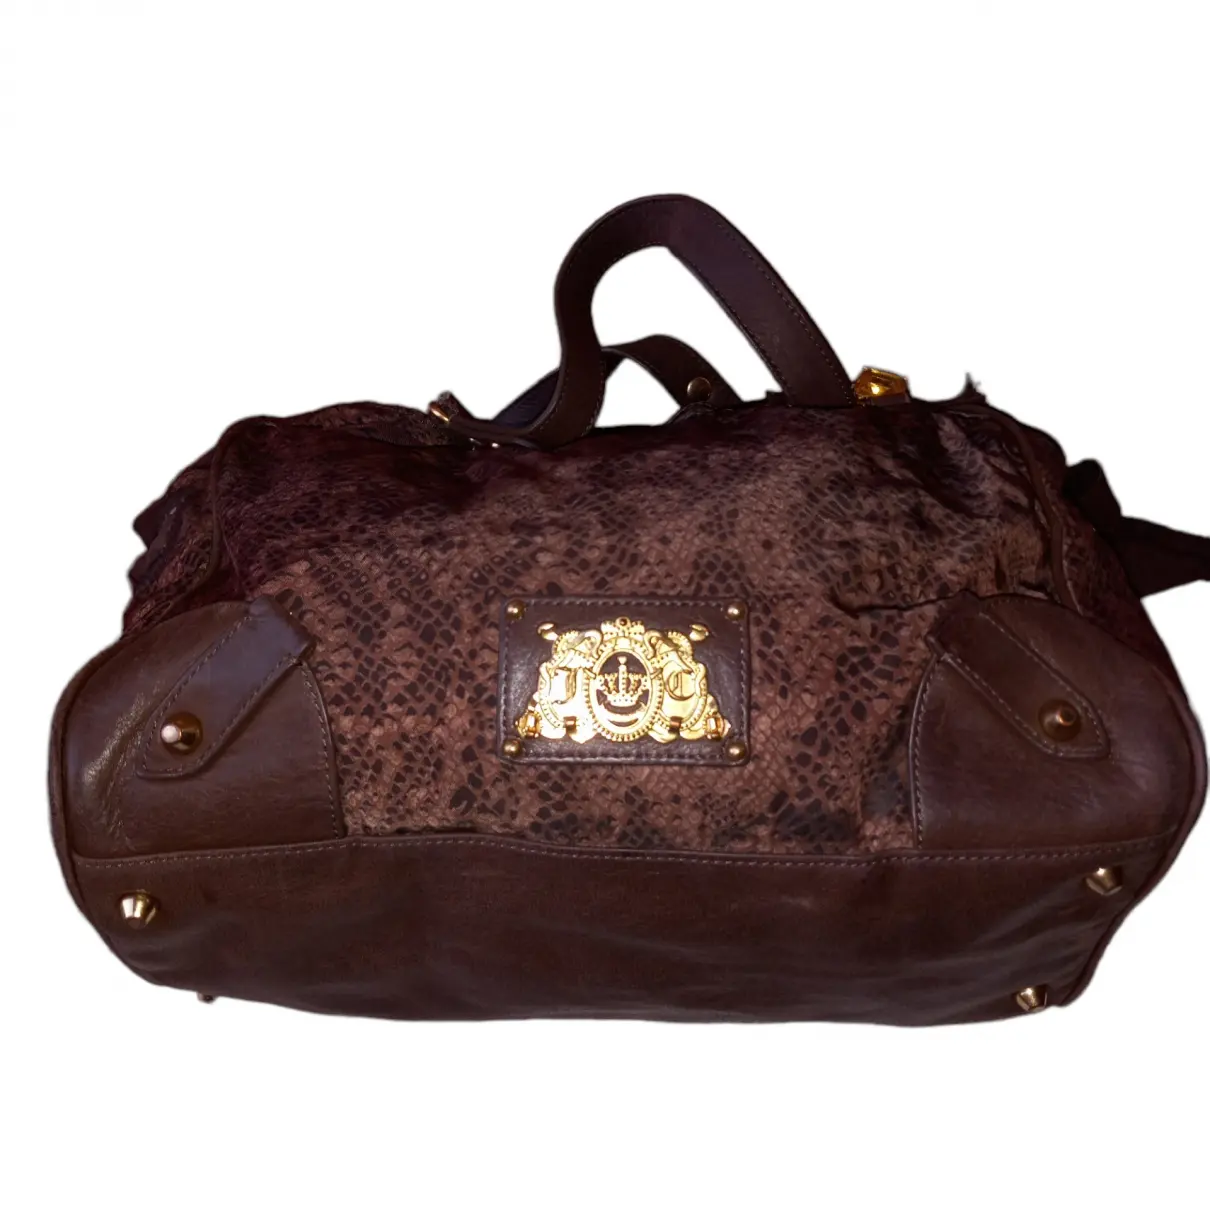 Buy Juicy Couture Leather handbag online